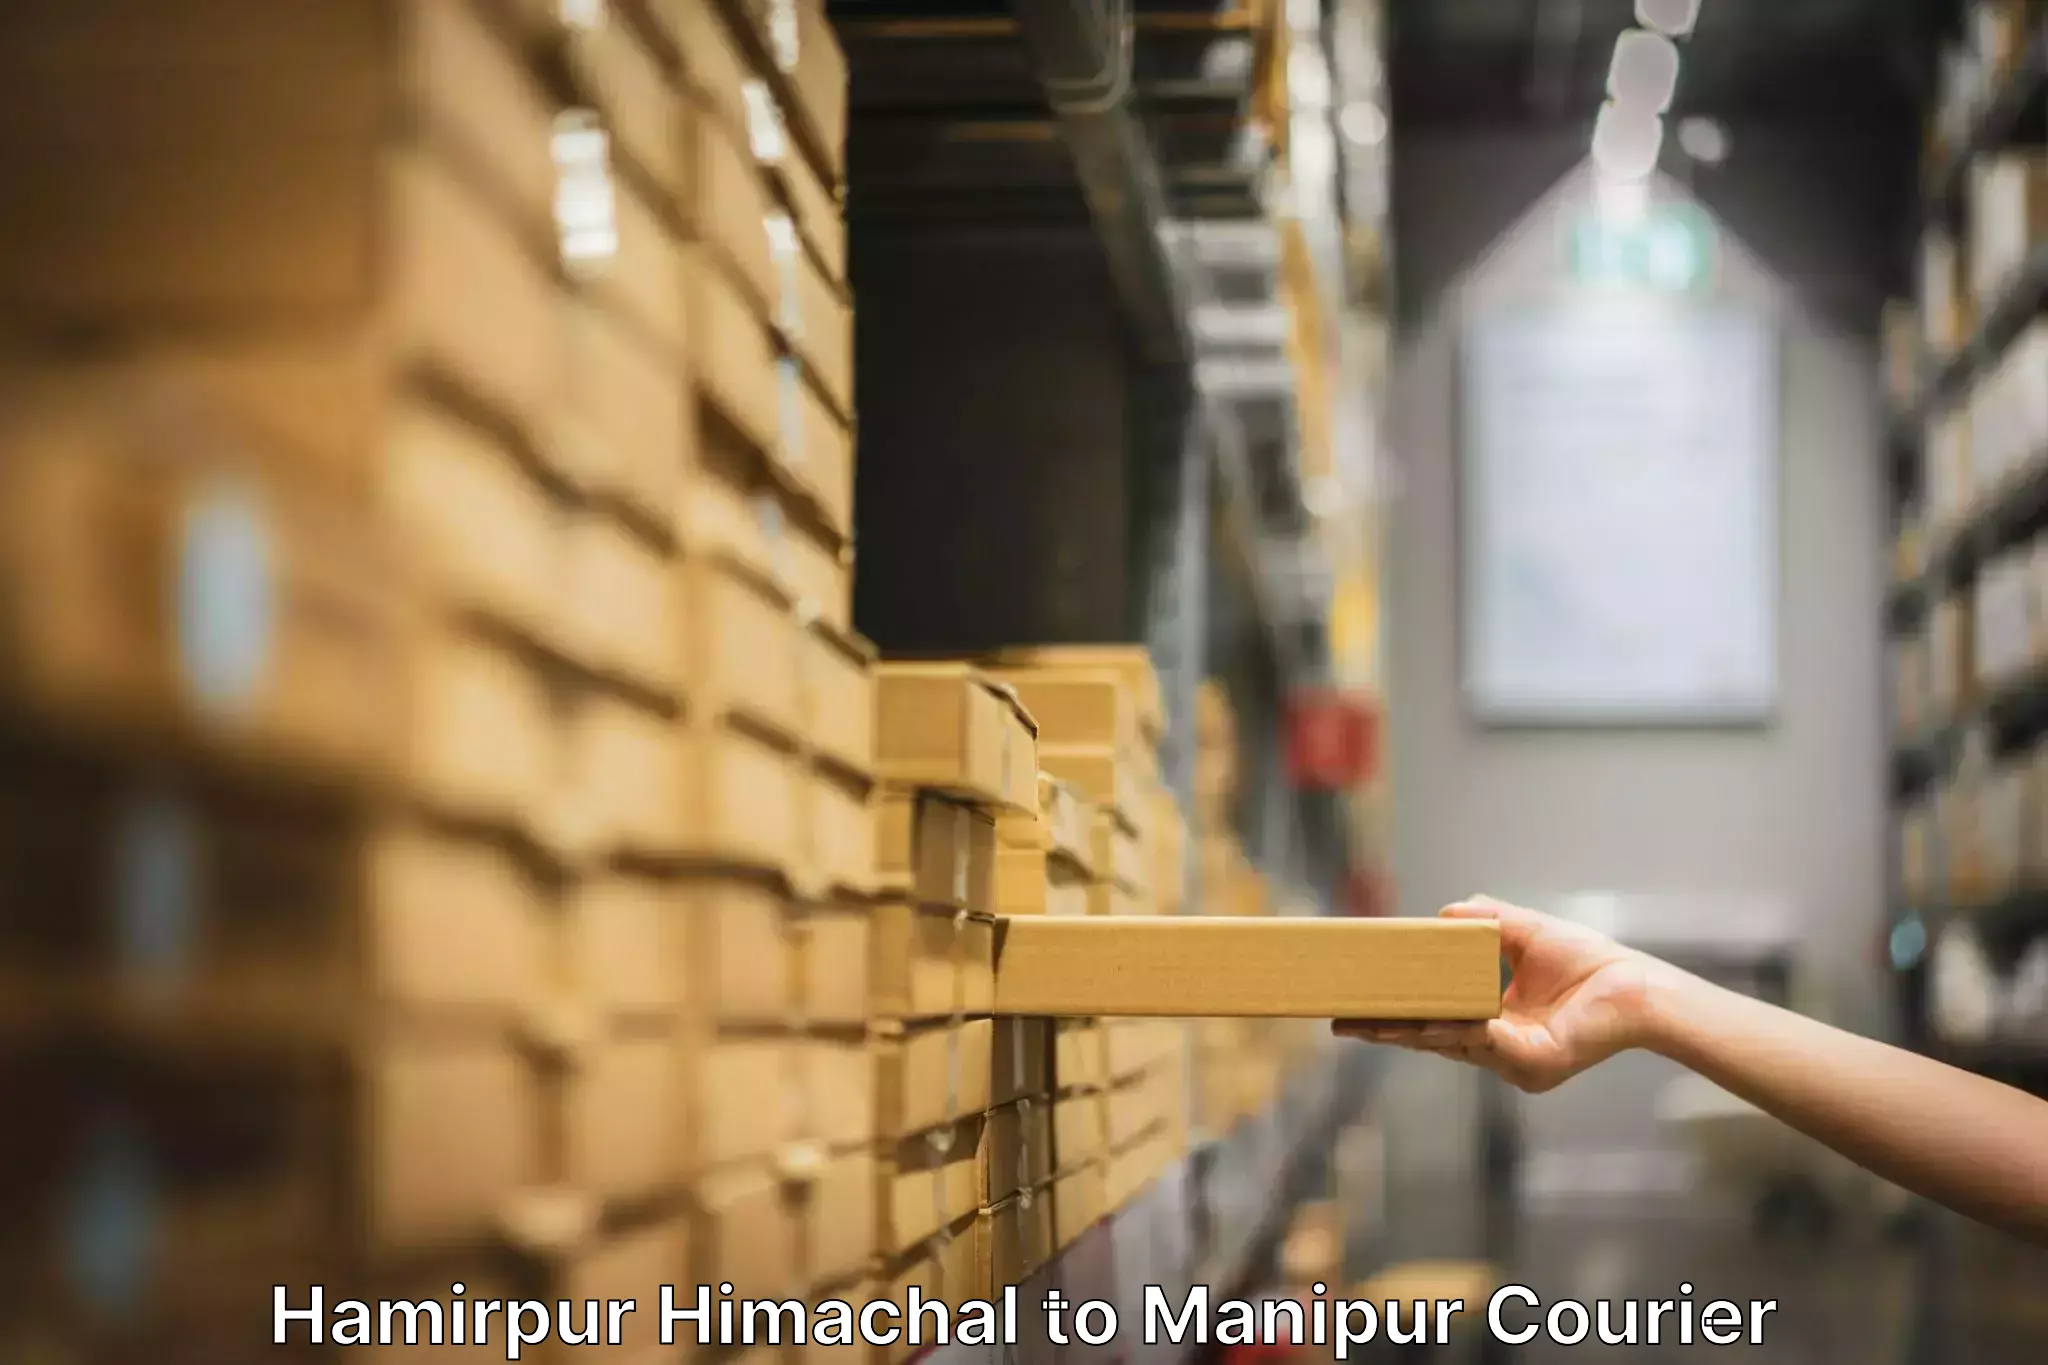 Furniture moving experts Hamirpur Himachal to Chandel